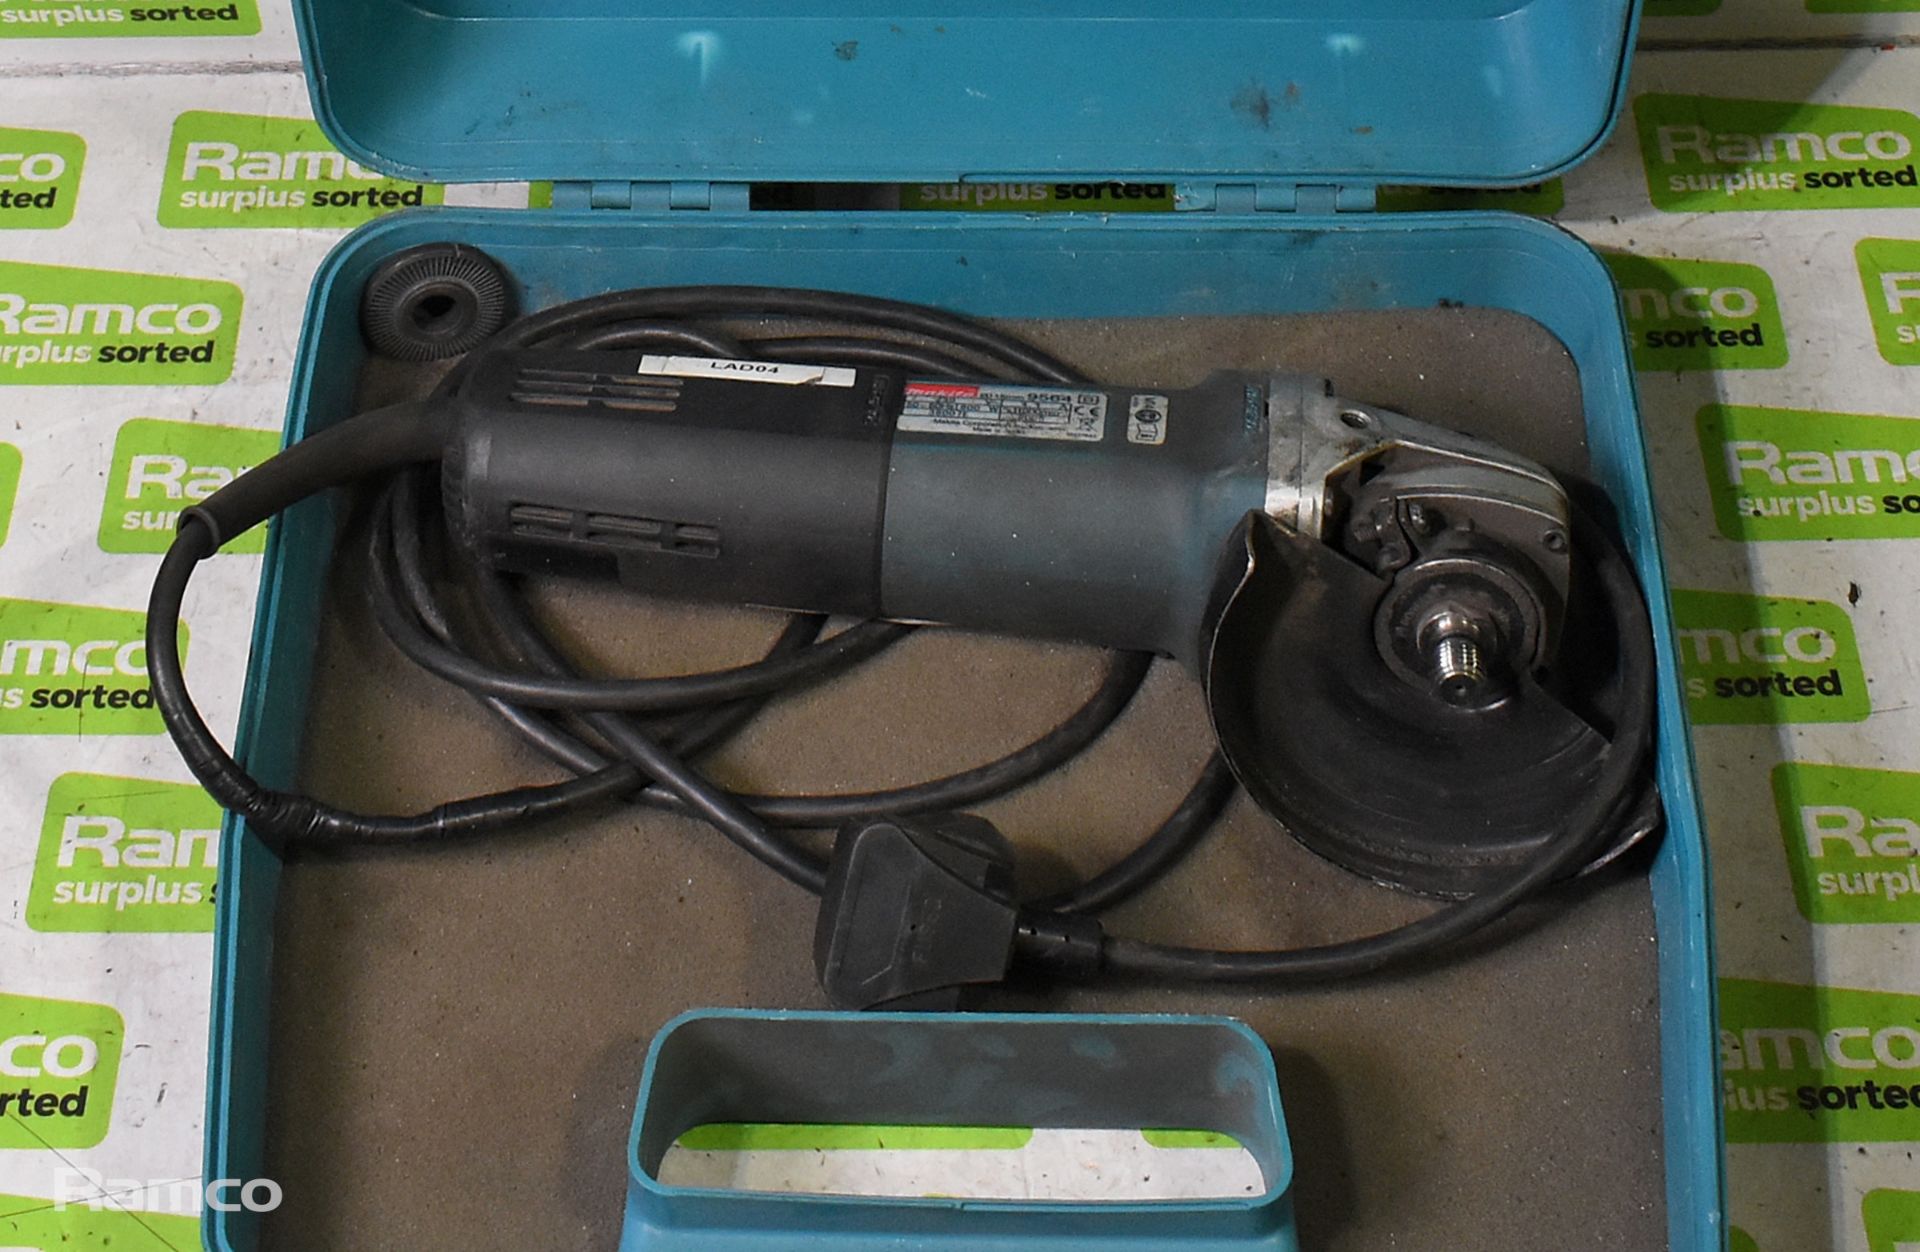 Makita 9564 portable electric grinder - in plastic case